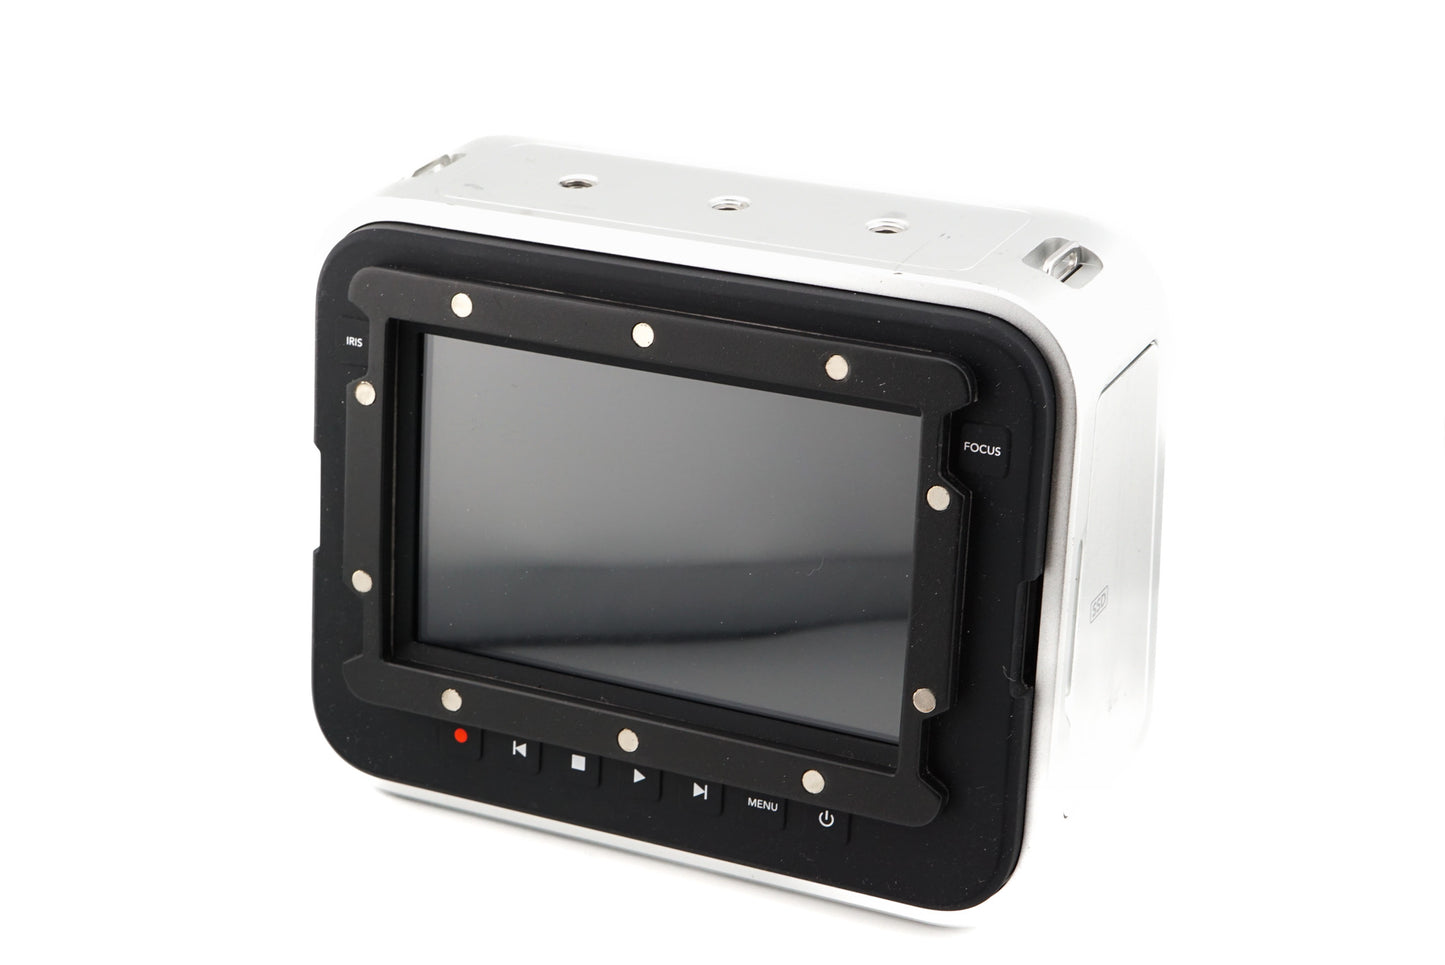 Blackmagic Design Cinema Camera 2.5K + Nikon F - Black Magic Speed Booster 0.58x (NIK F(G) - BMPCC) + Top Handle + Camera Cage for BMCC + LSW Base Plate + Screen Loupe